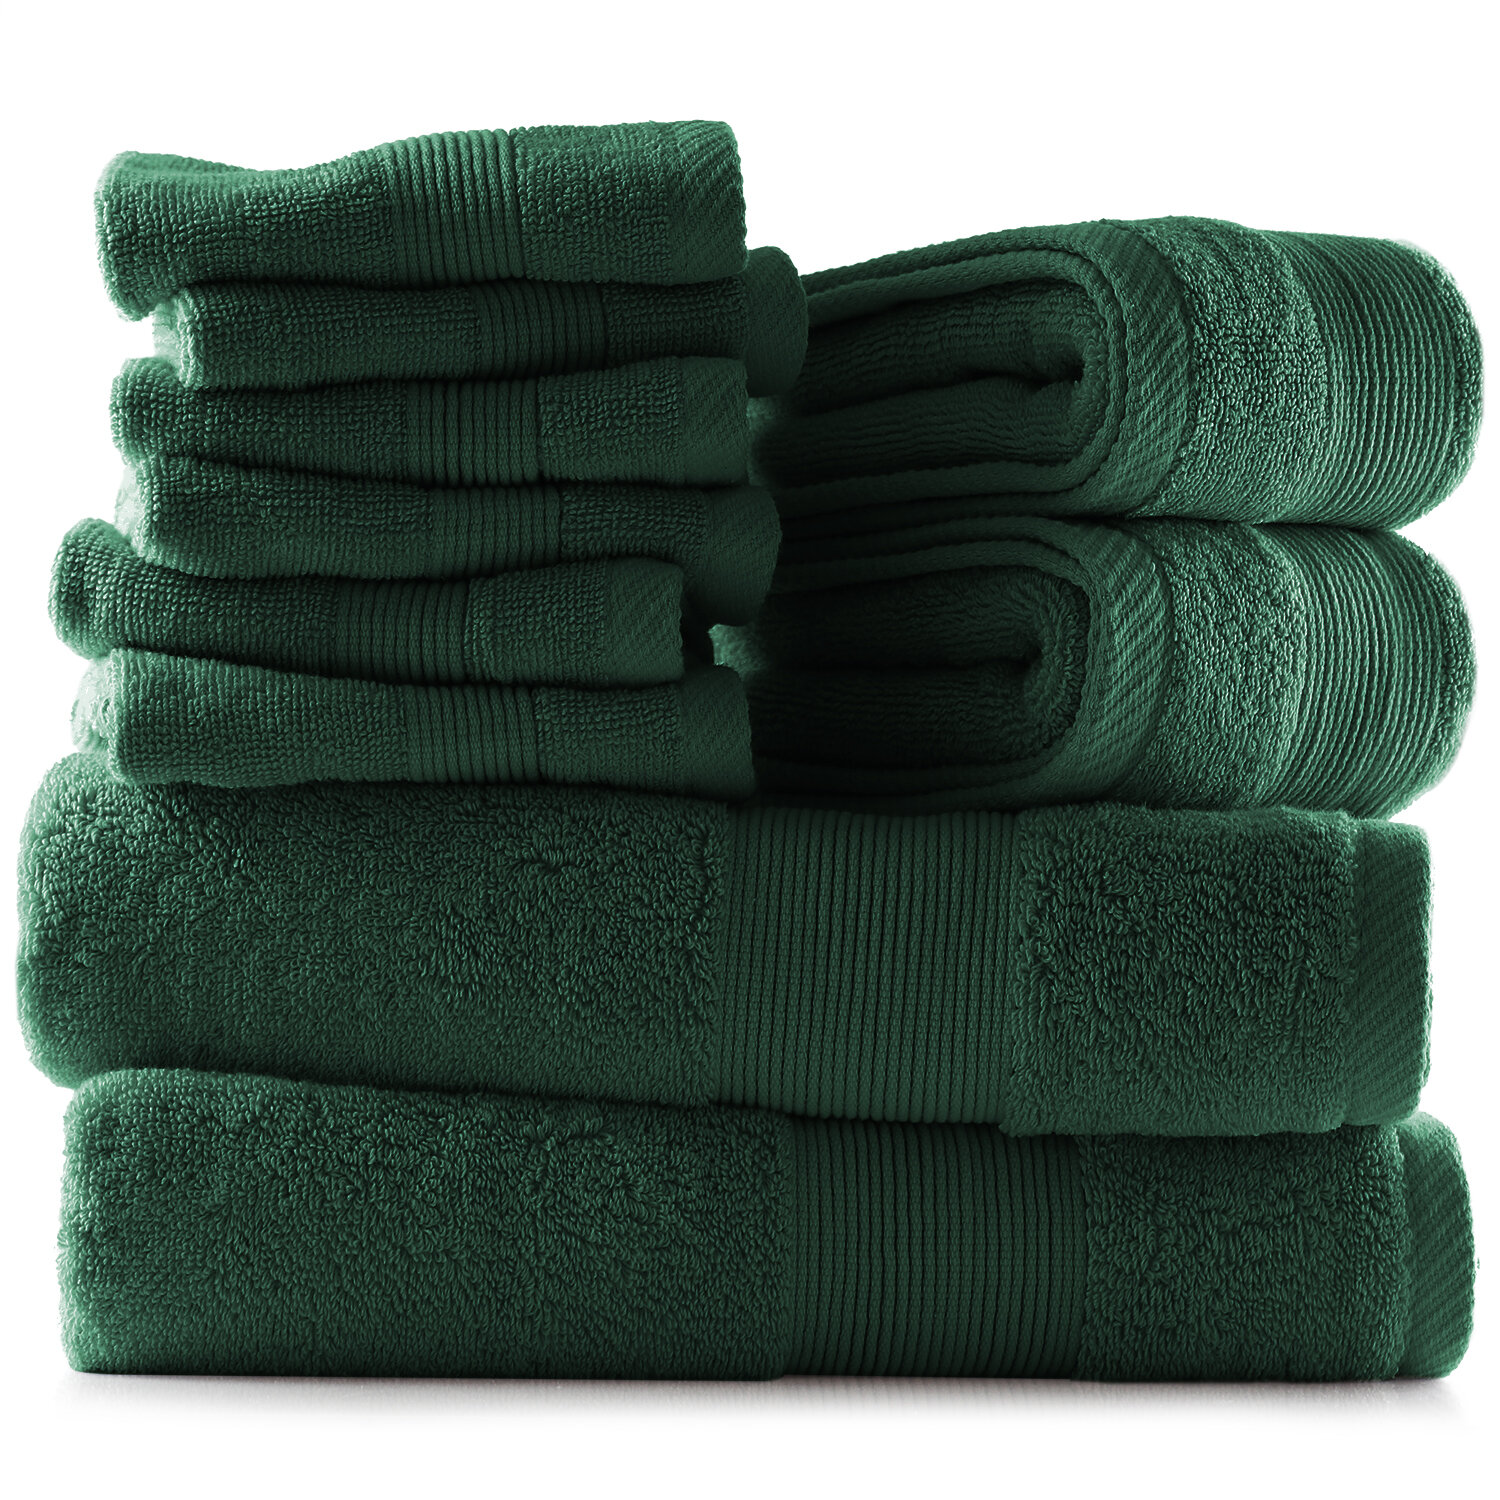 Madison Park Signature 800GSM 8-Piece Dark Green 100% Cotton Towel Set